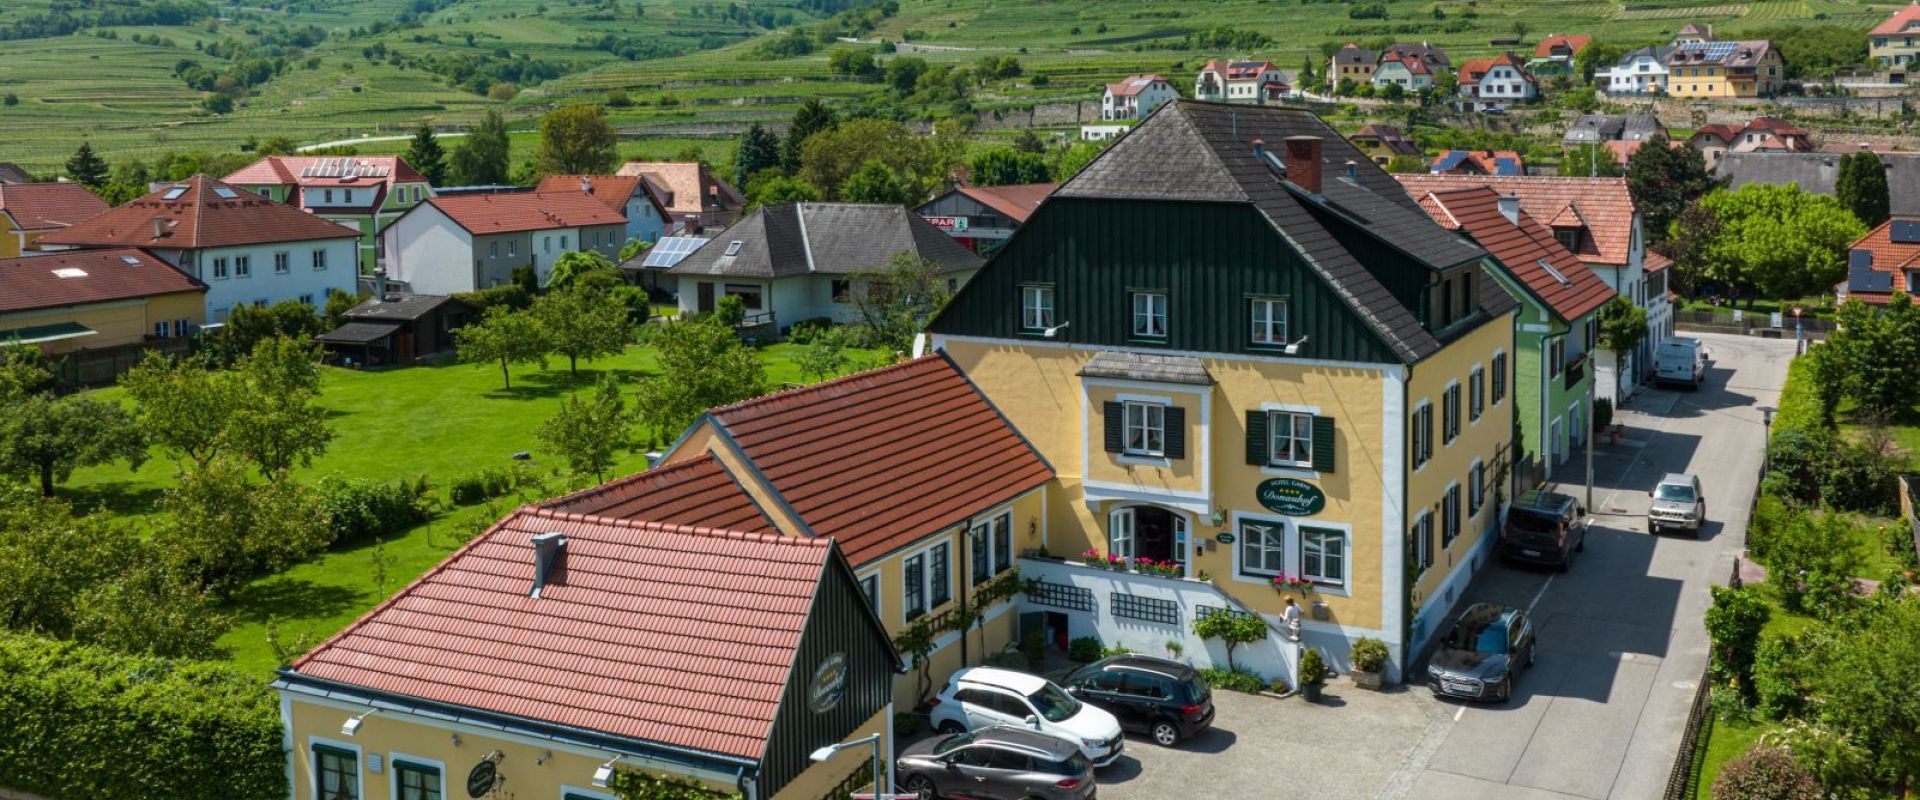 Hotel Donauhof Wachau Weissenkirchen